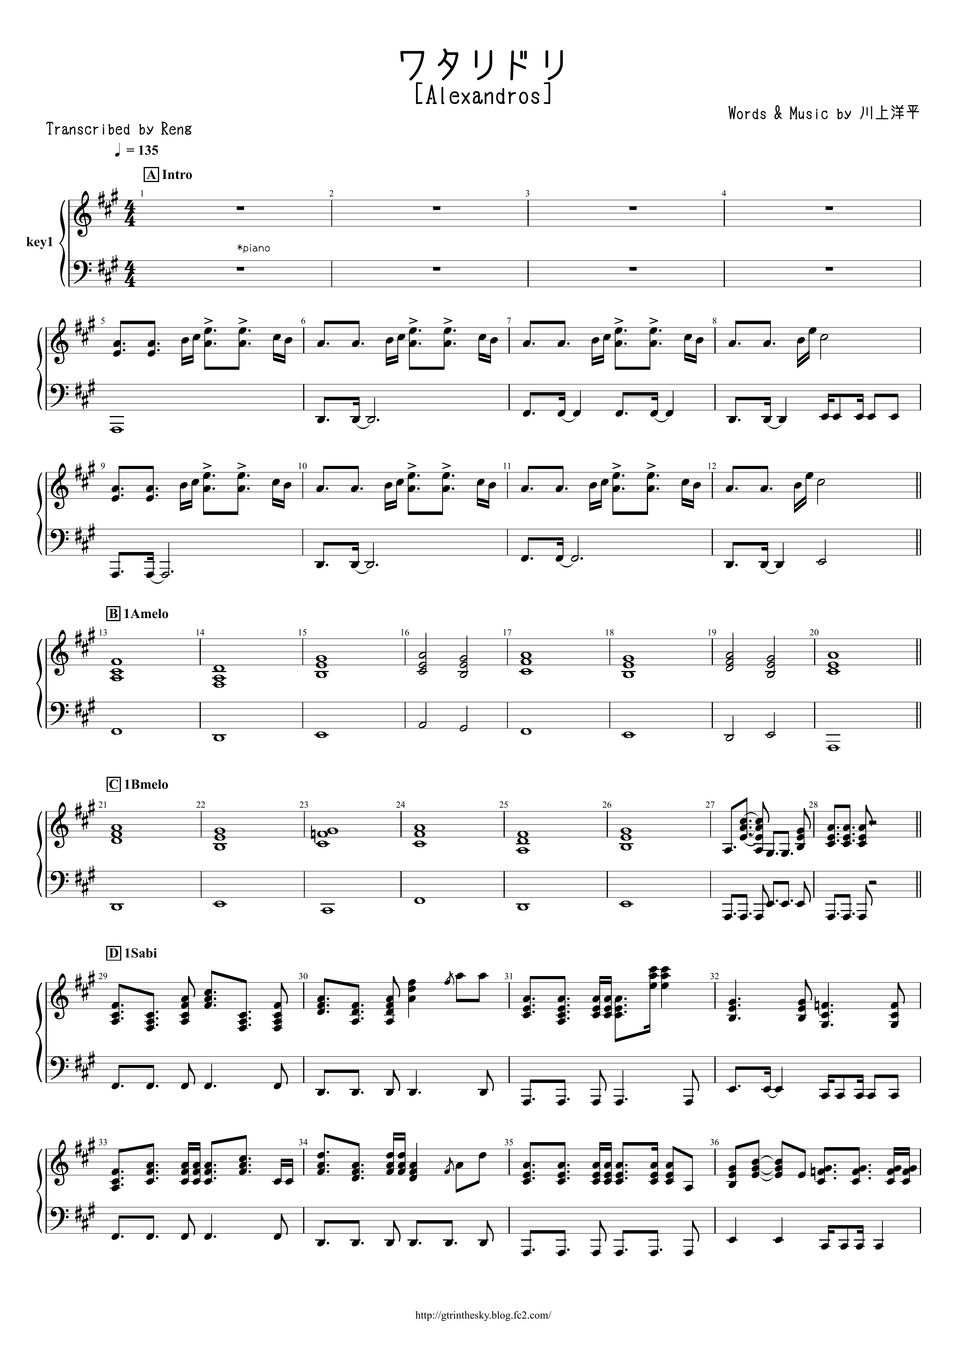 [Alexandros] - ワタリドリ (Key/キーボード/ピアノ) by Score by Reng